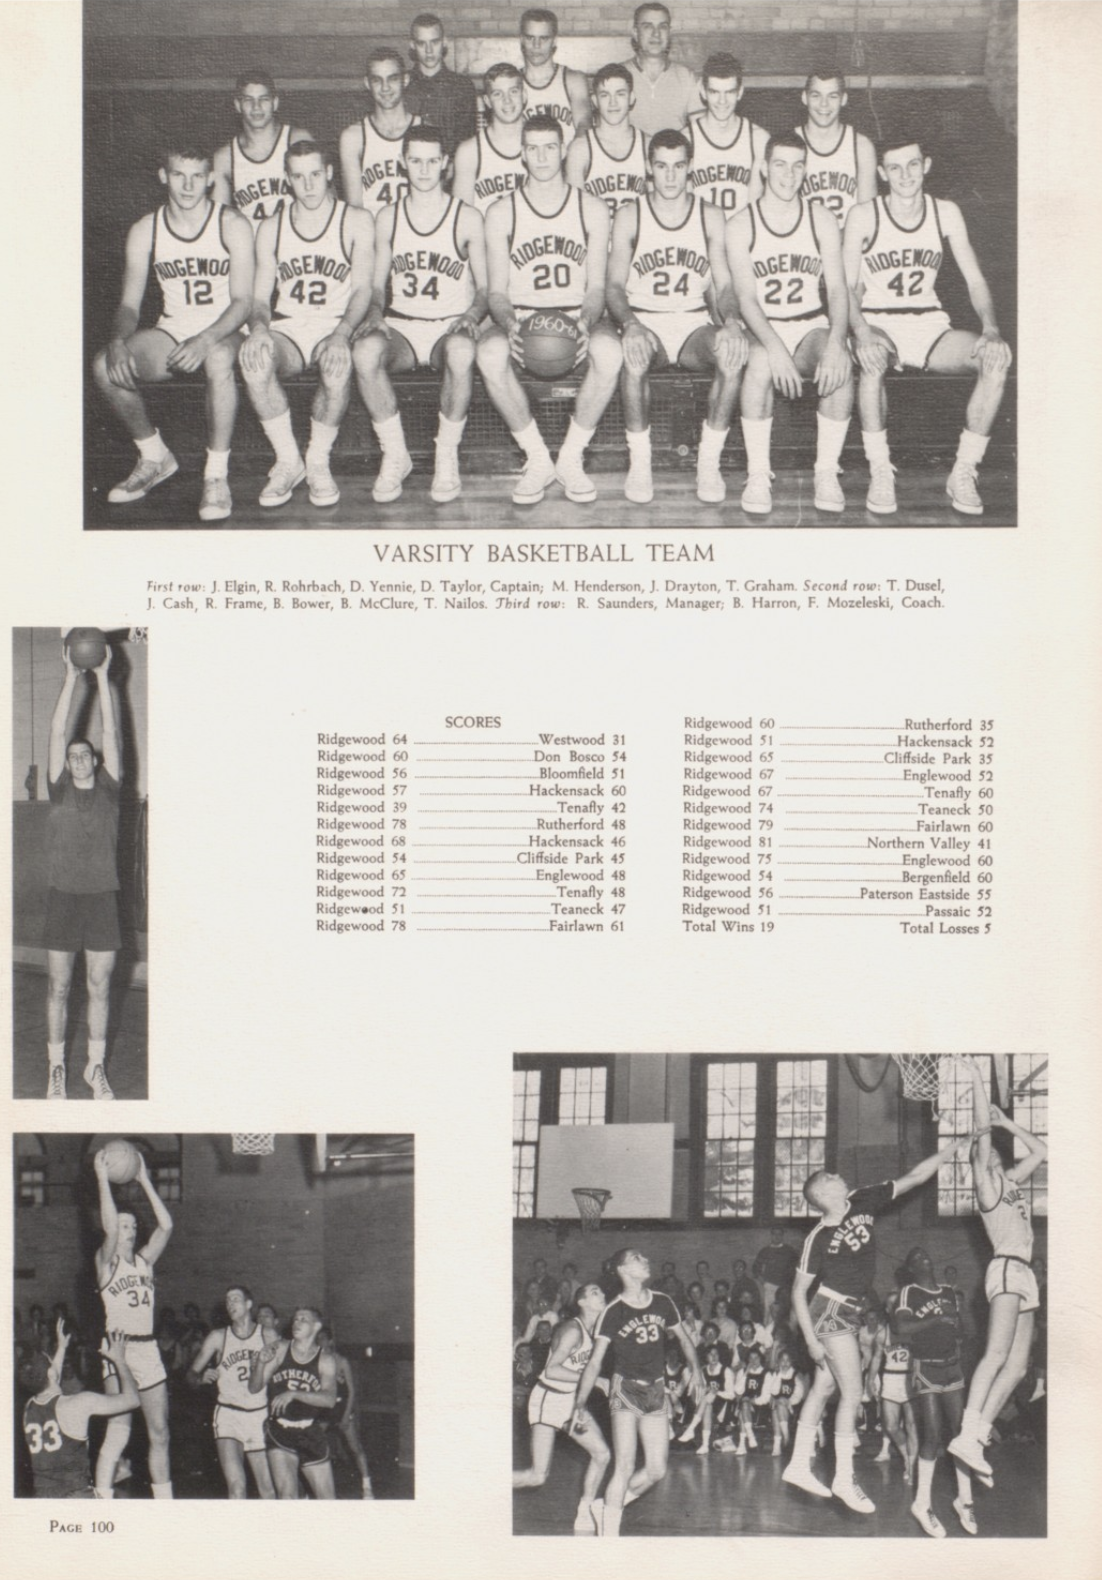 1961 Boys’ Basketball Team